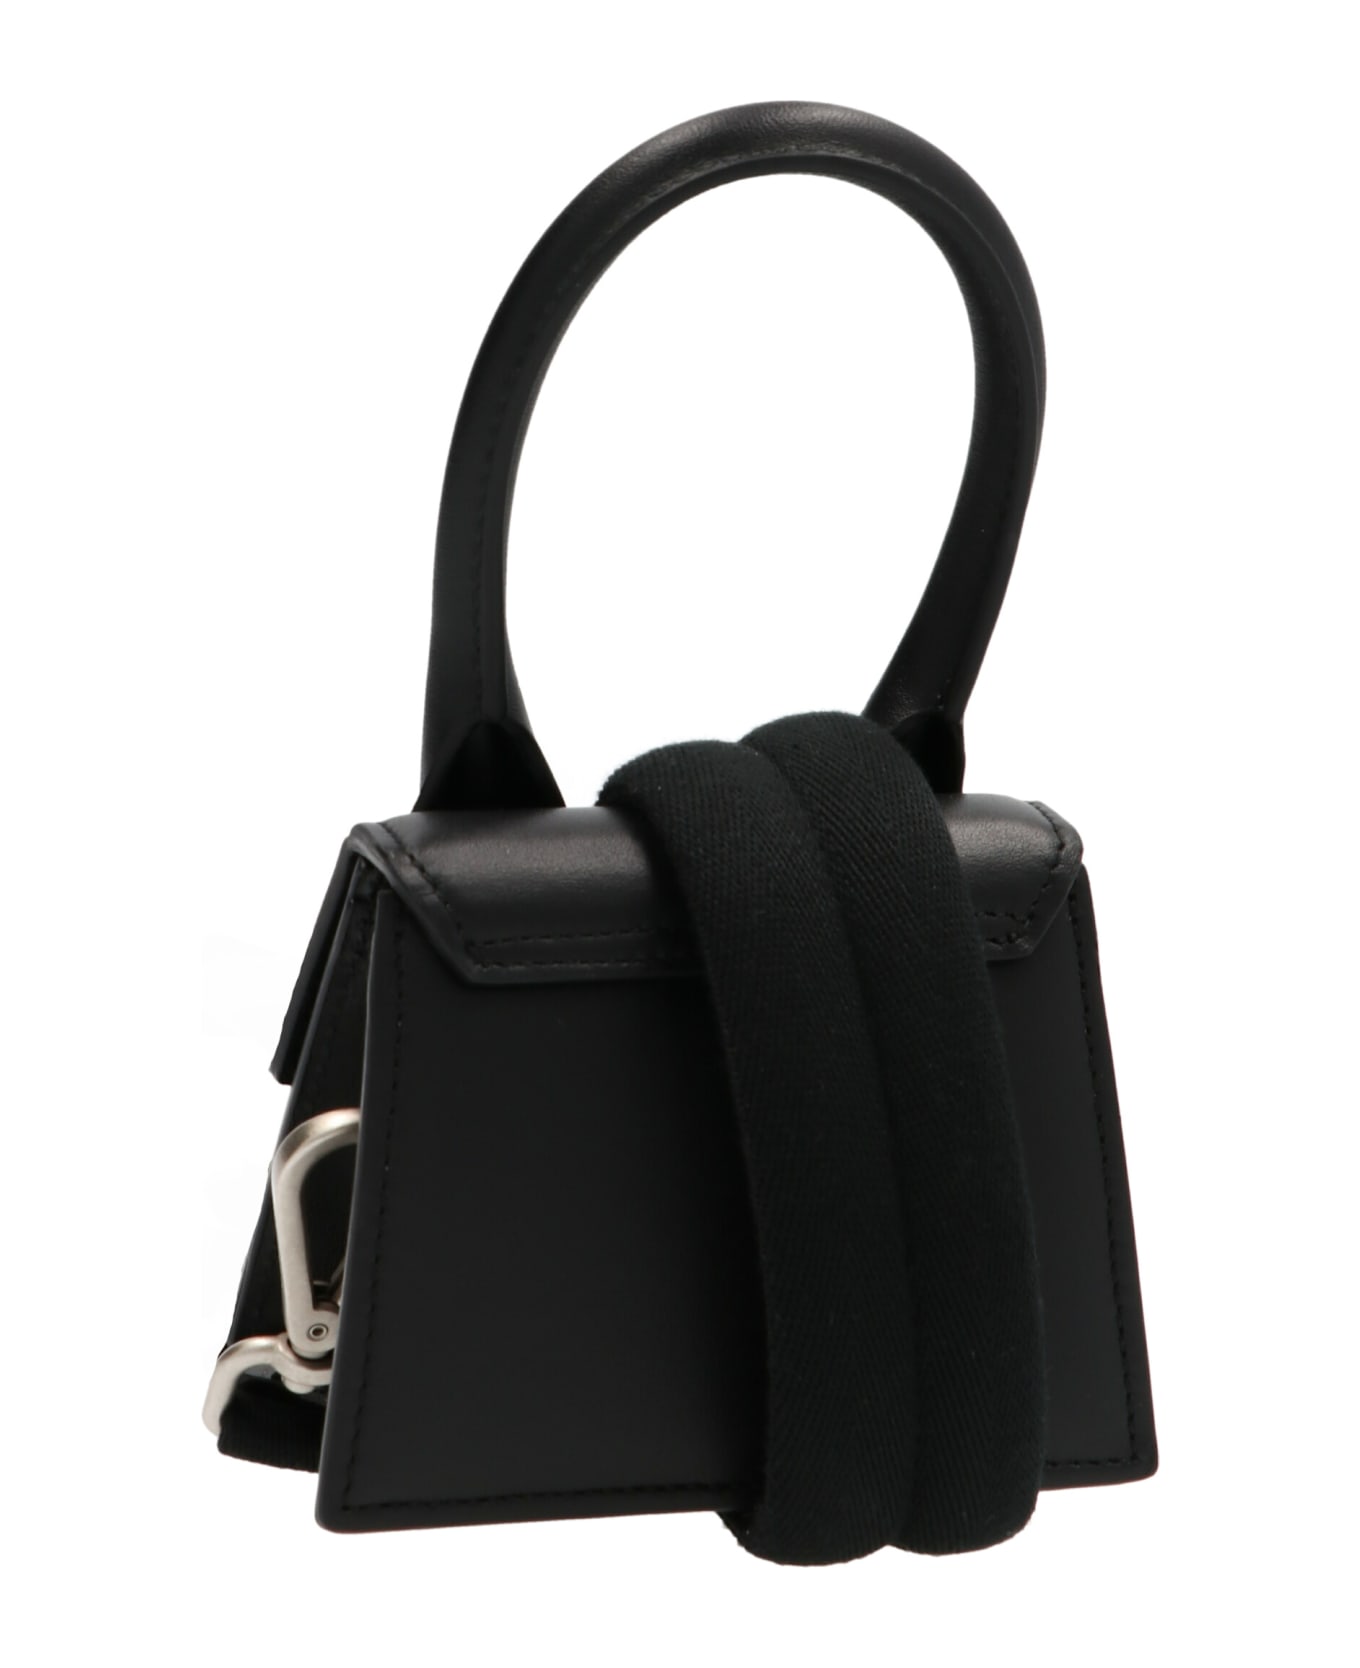 Jacquemus 'le Chiquito Homme' Mini Handbag - Black   トートバッグ